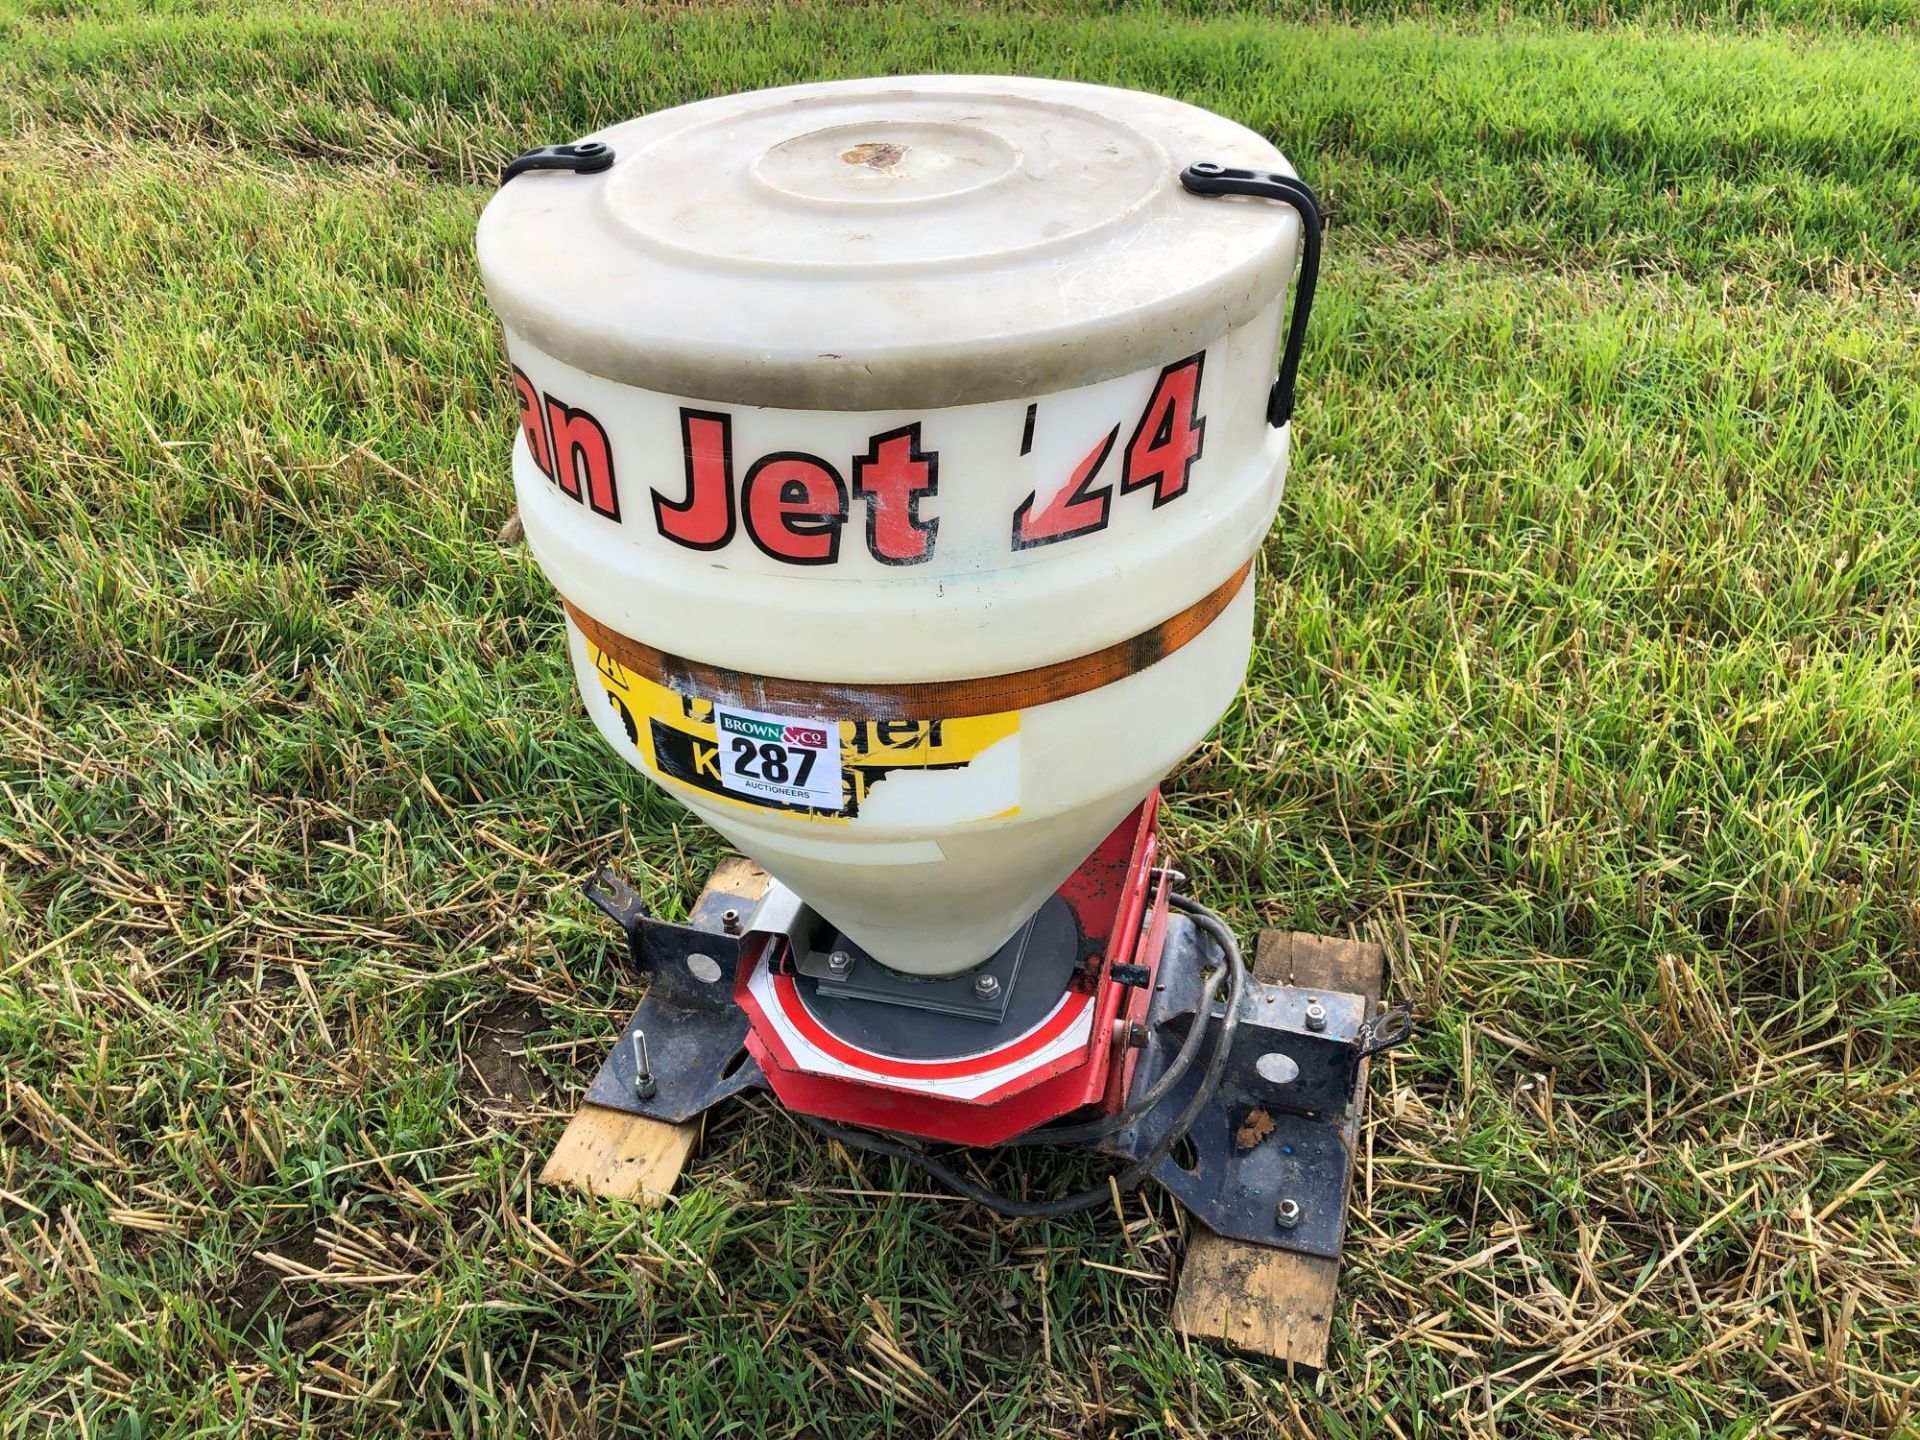 Stocks AG Fan Jet 24 slug pelleter, electric powered. Control box in office